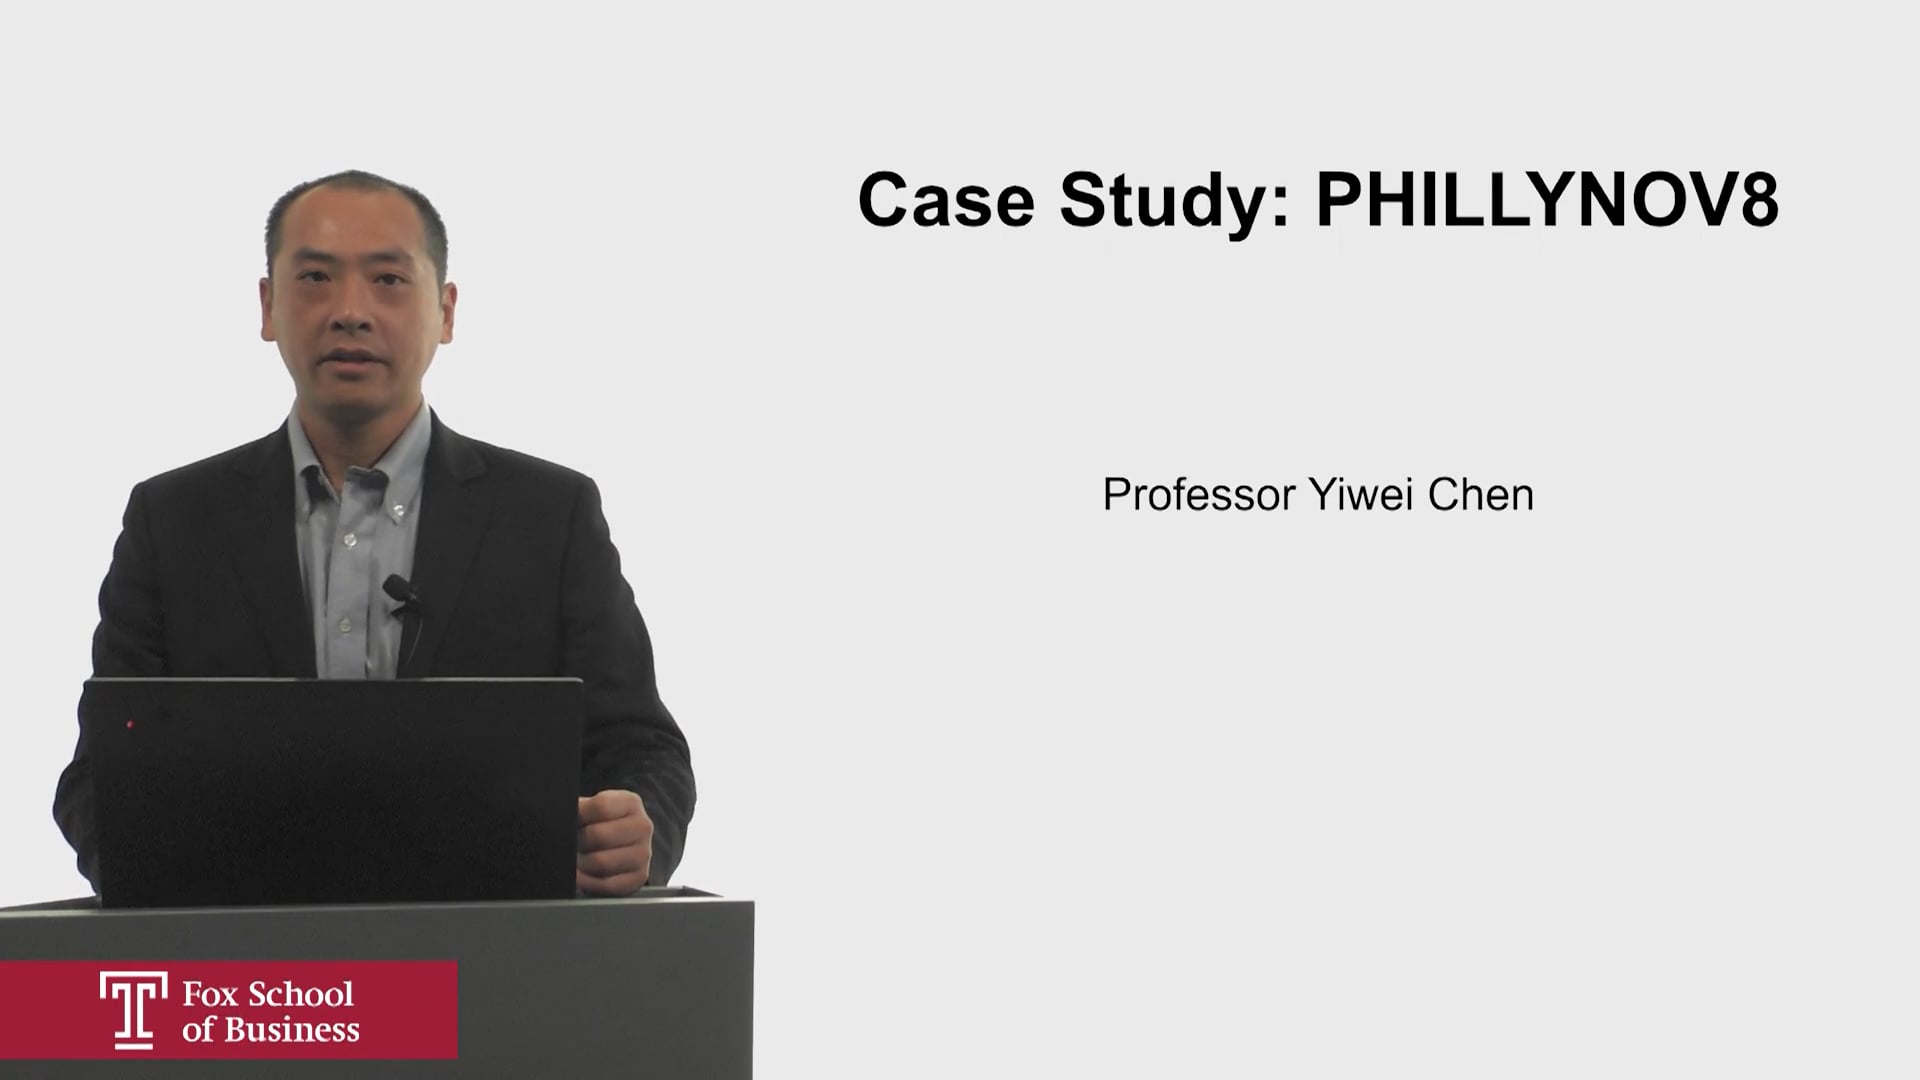 Case Study PHILLYNOV8